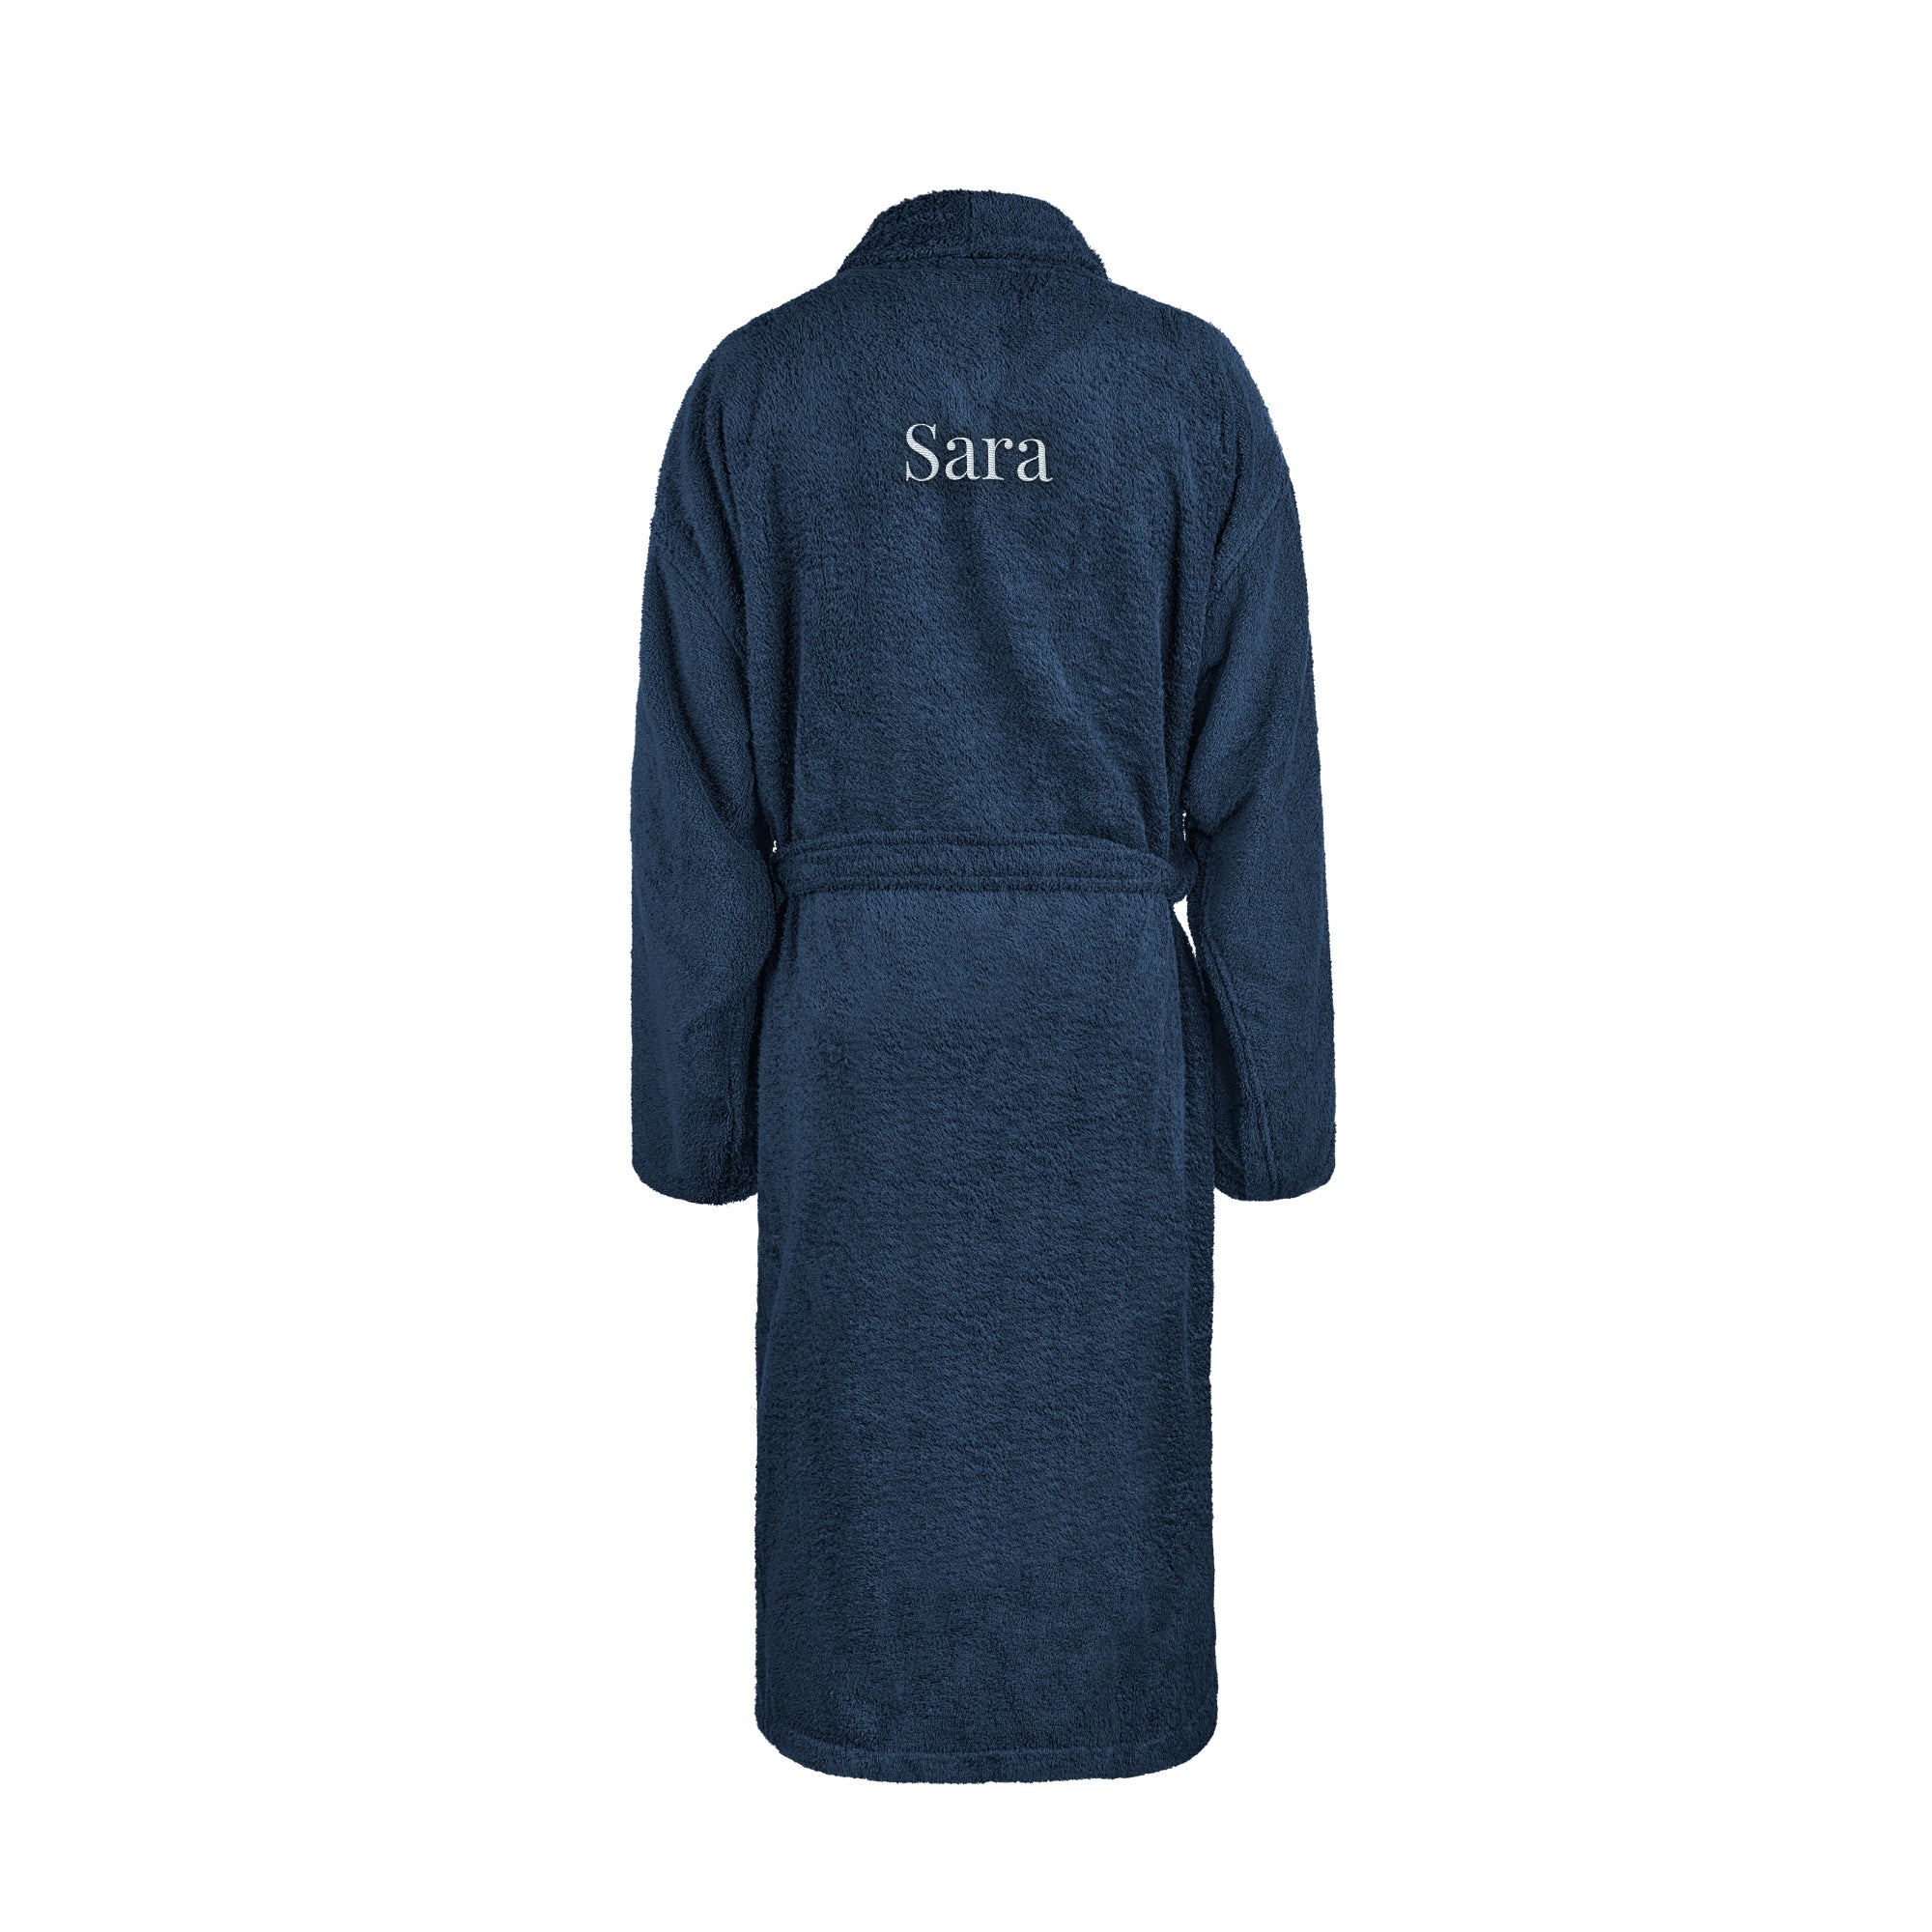 Dames badjas borduren - Donkerblauw - L/XL